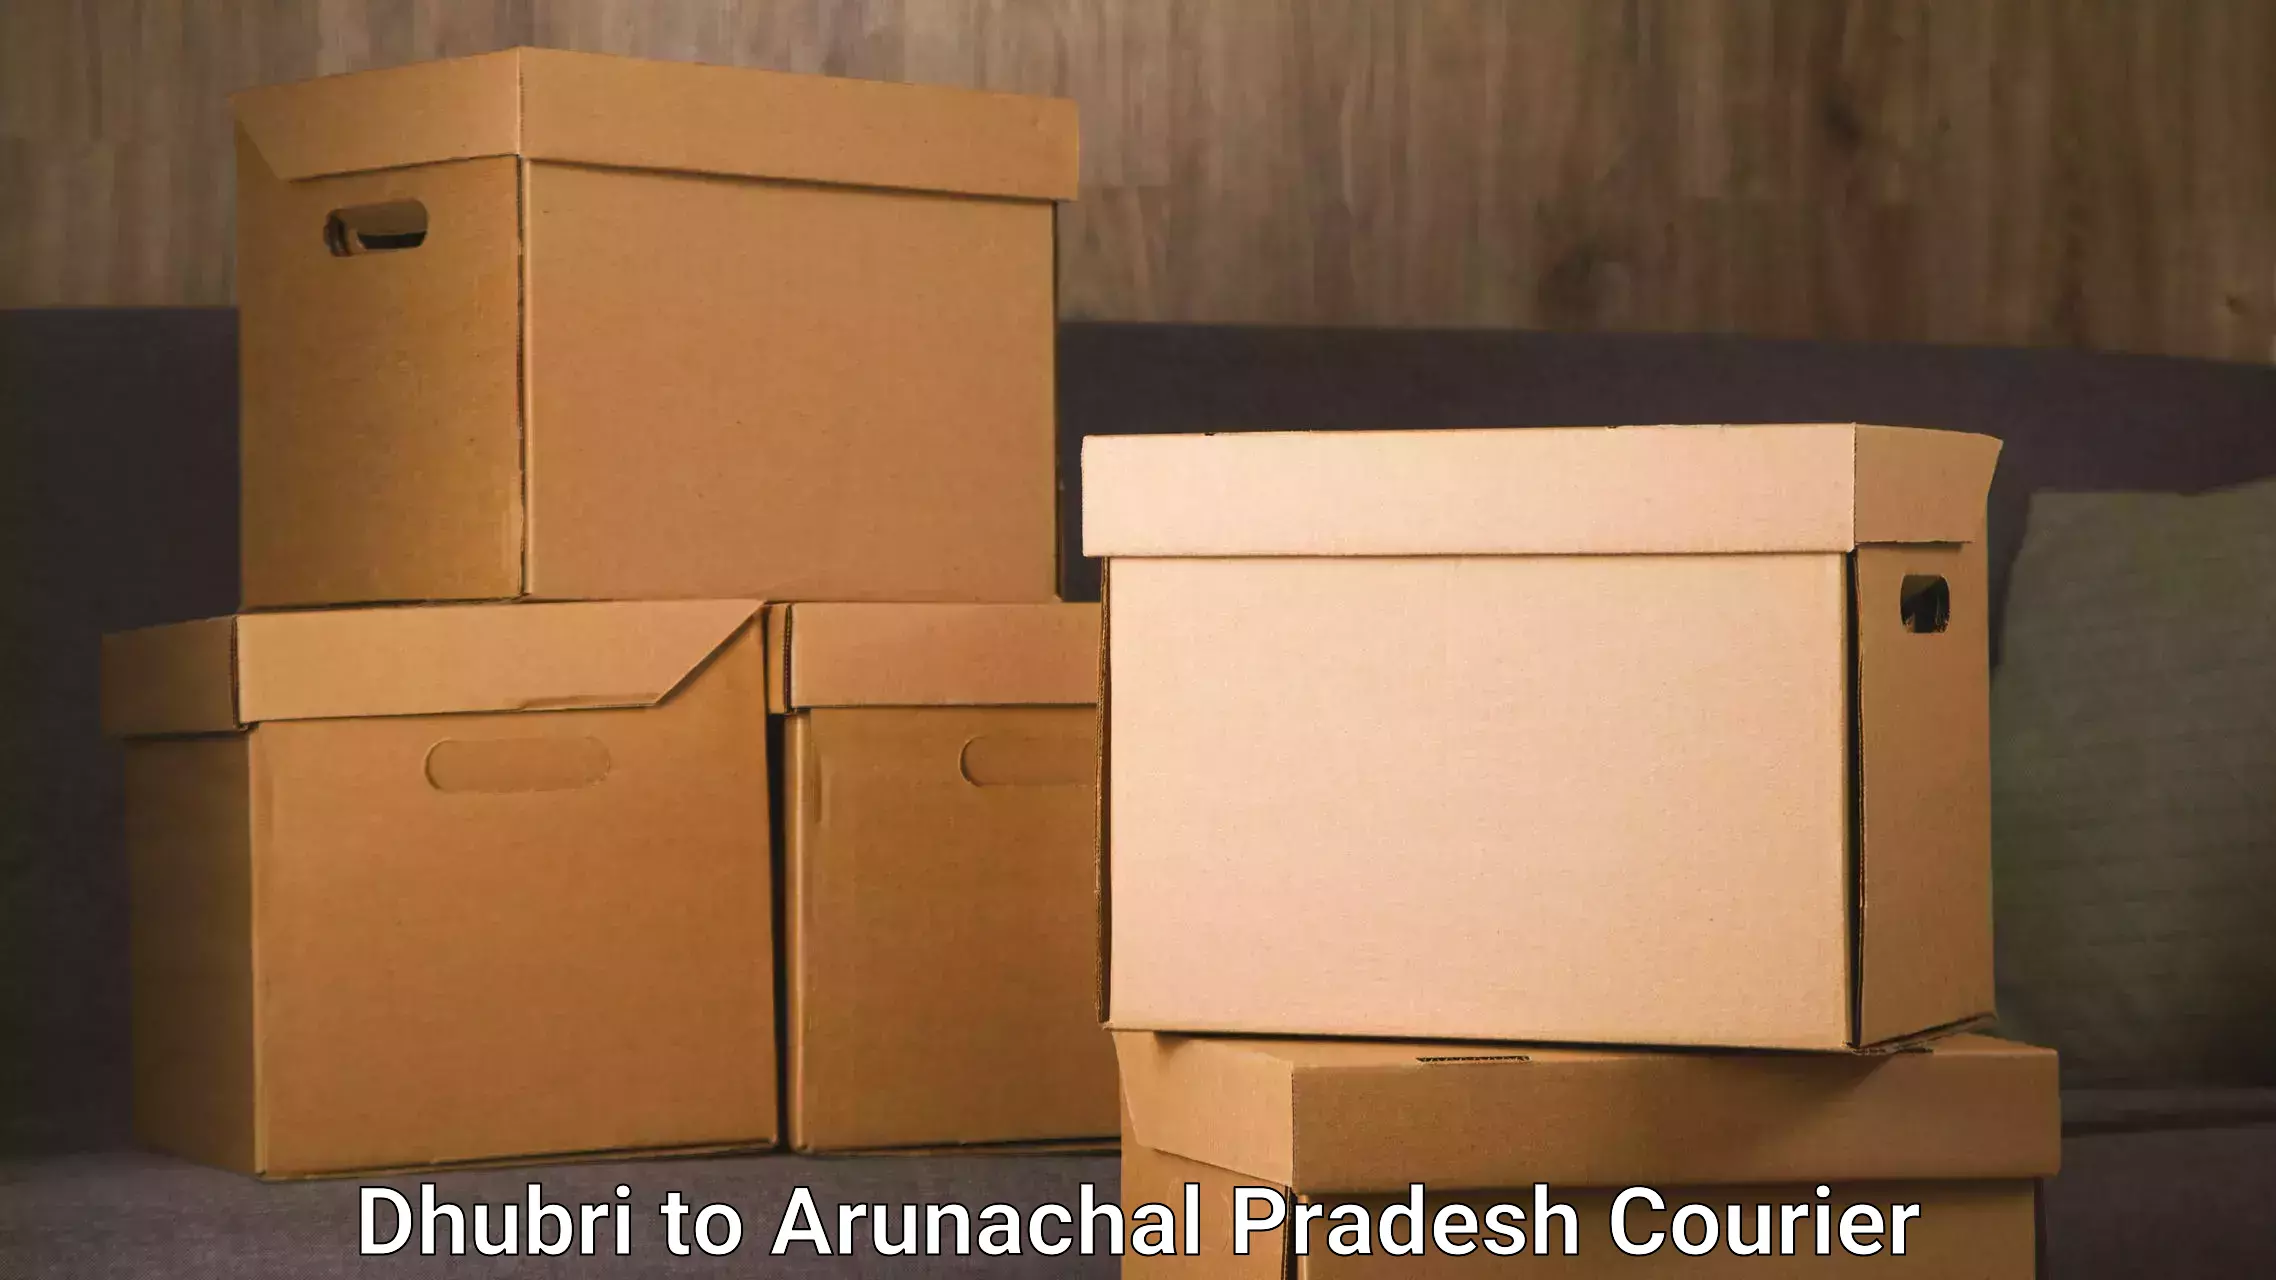 Logistics service provider Dhubri to Tirap